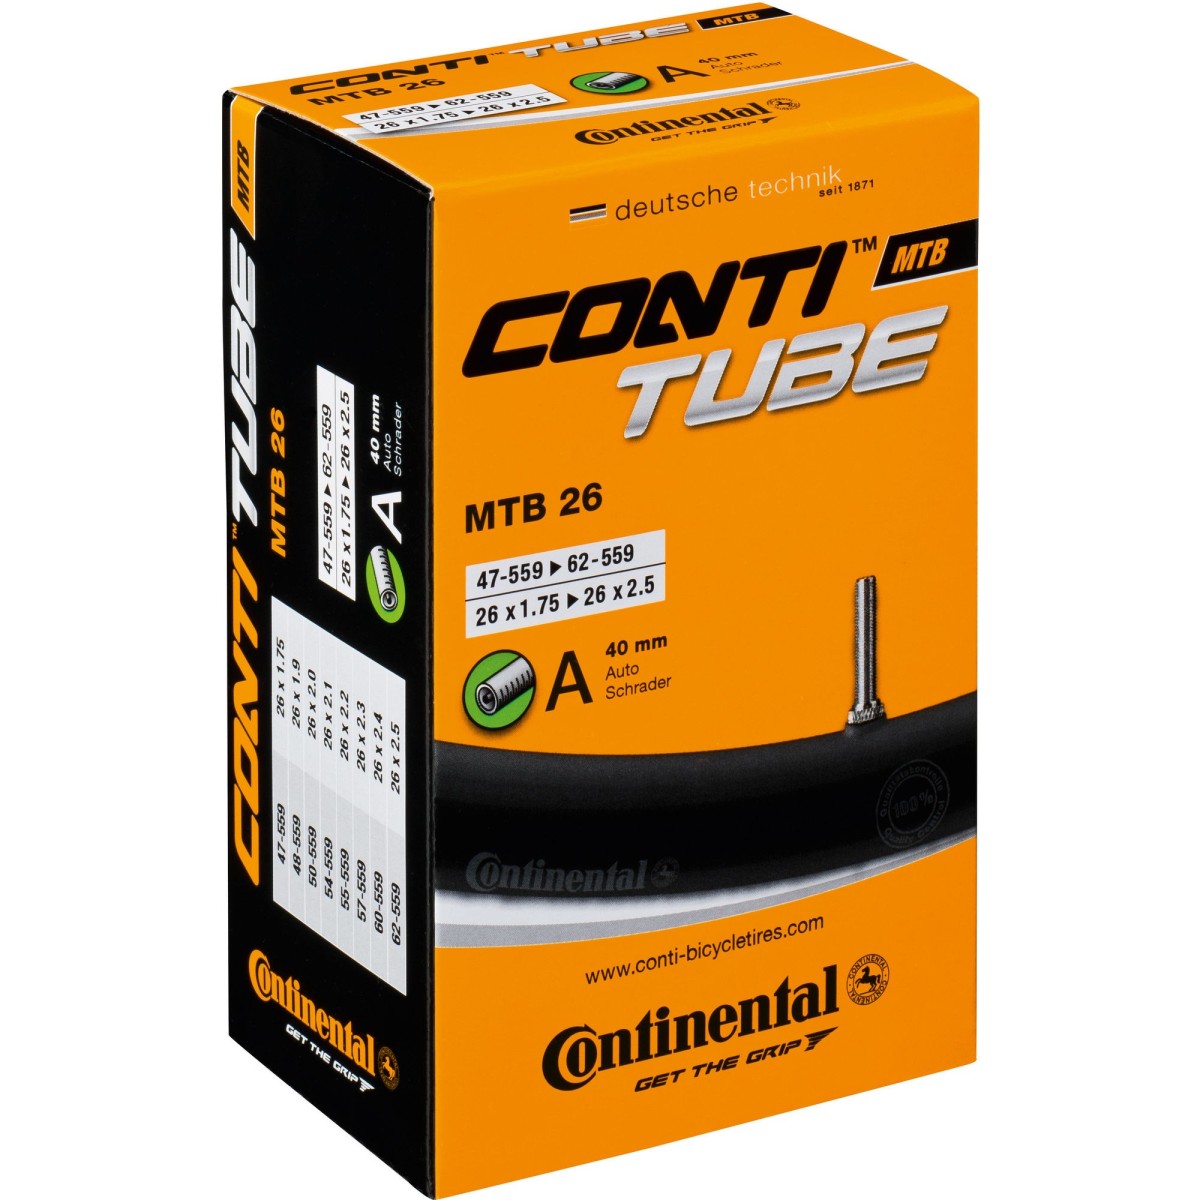 Conti Tube MTB 26 x 1.75 - 2.5